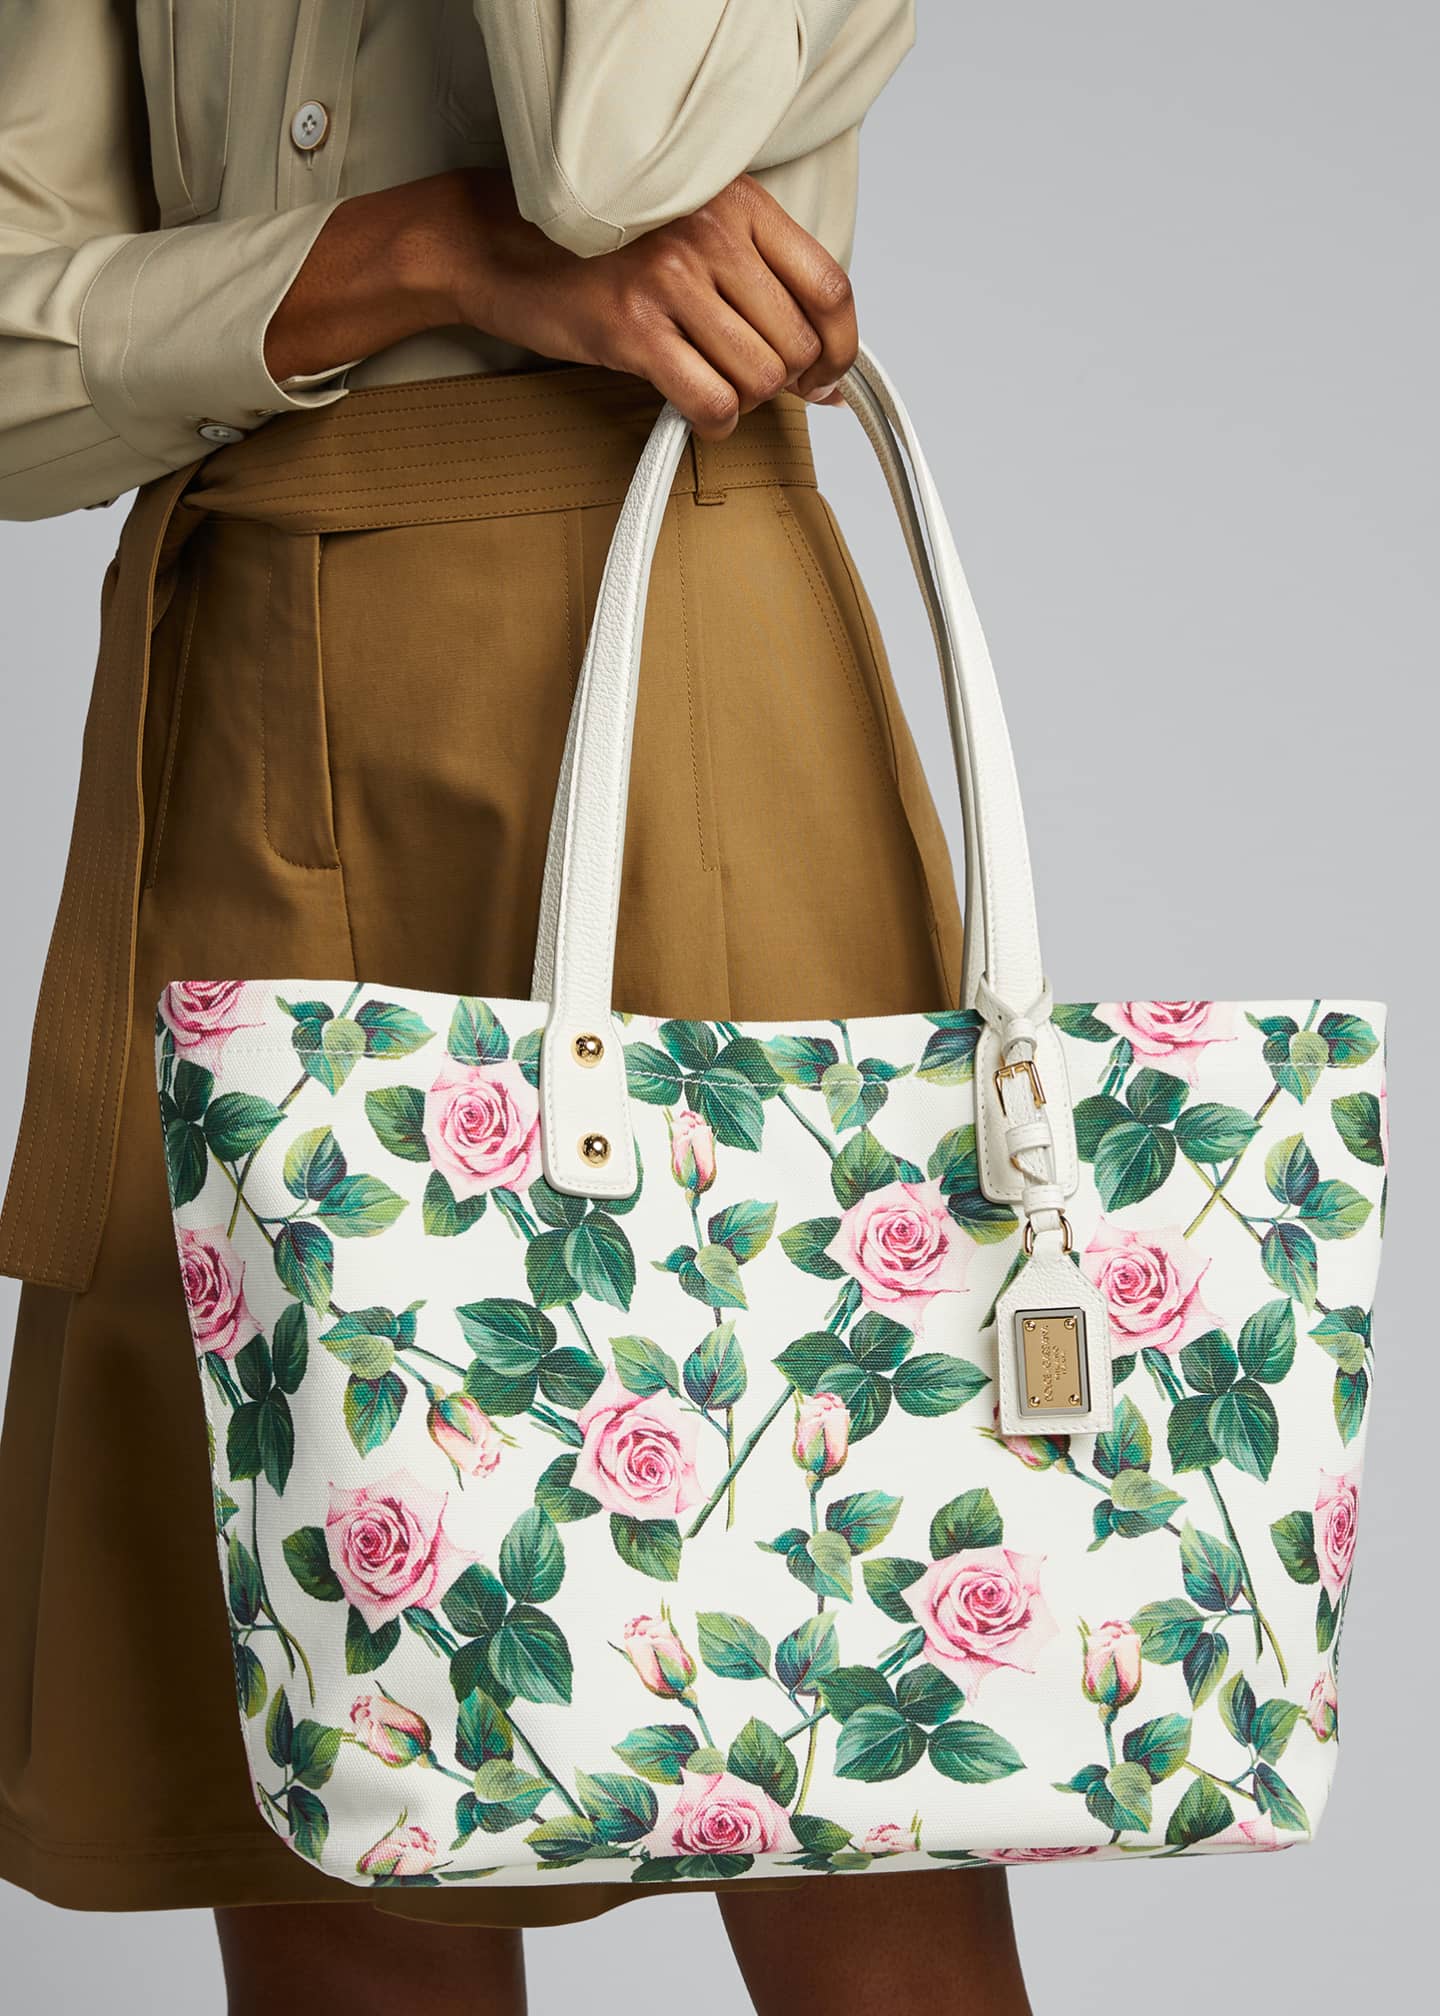 Dolce & Gabbana Tropical Rose Canvas Tote Bag - Bergdorf Goodman